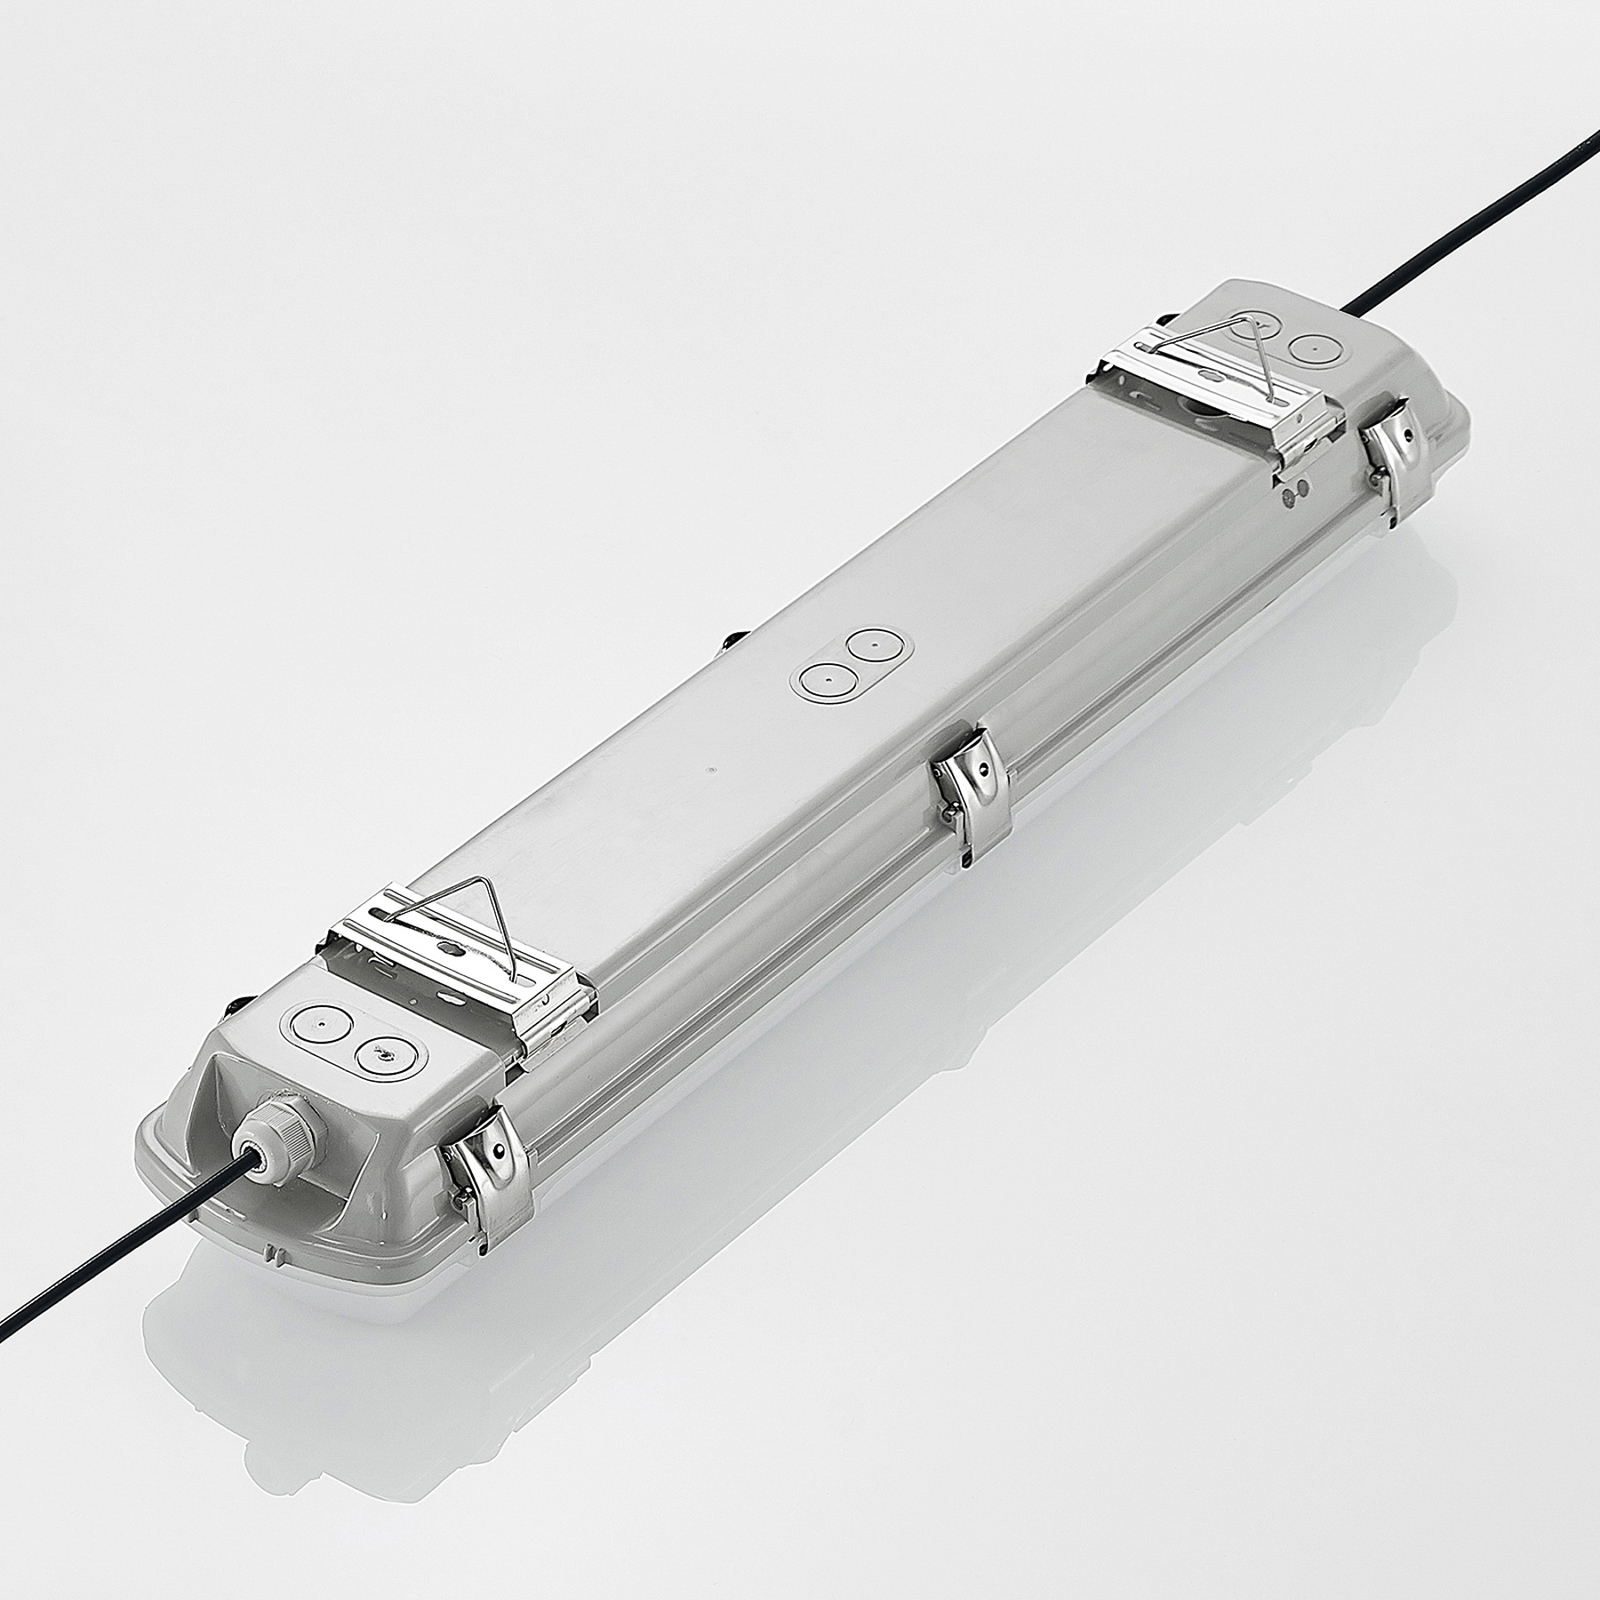 Arcchio Rao LED-es nedvességálló lámpatest, hossza 61,8 cm, 5 darabos